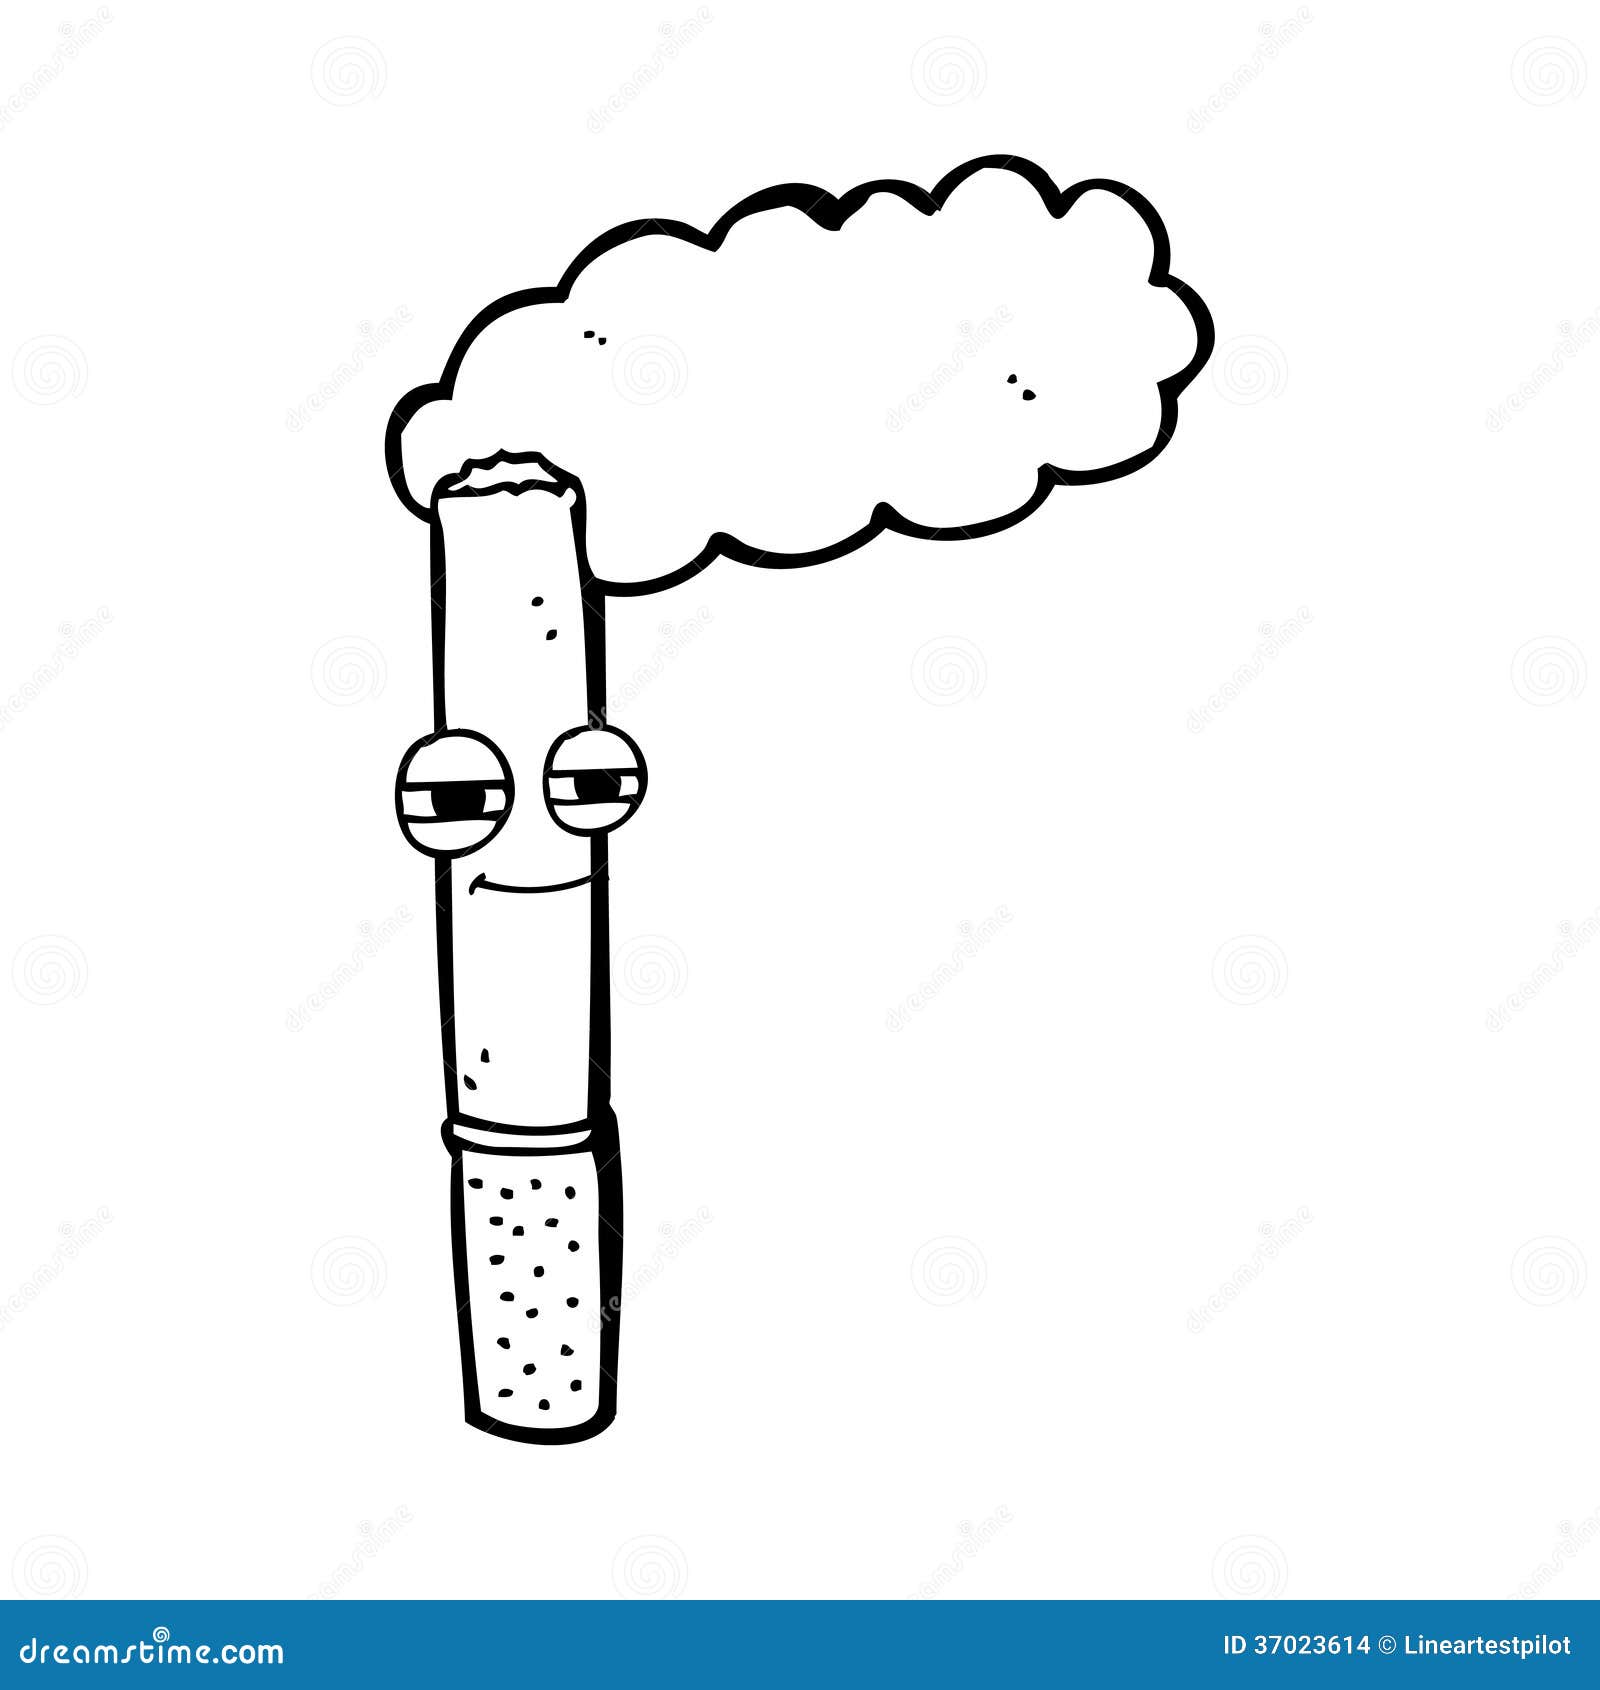 Cartoon happy cigarette stock illustration. Illustration of doodle ...